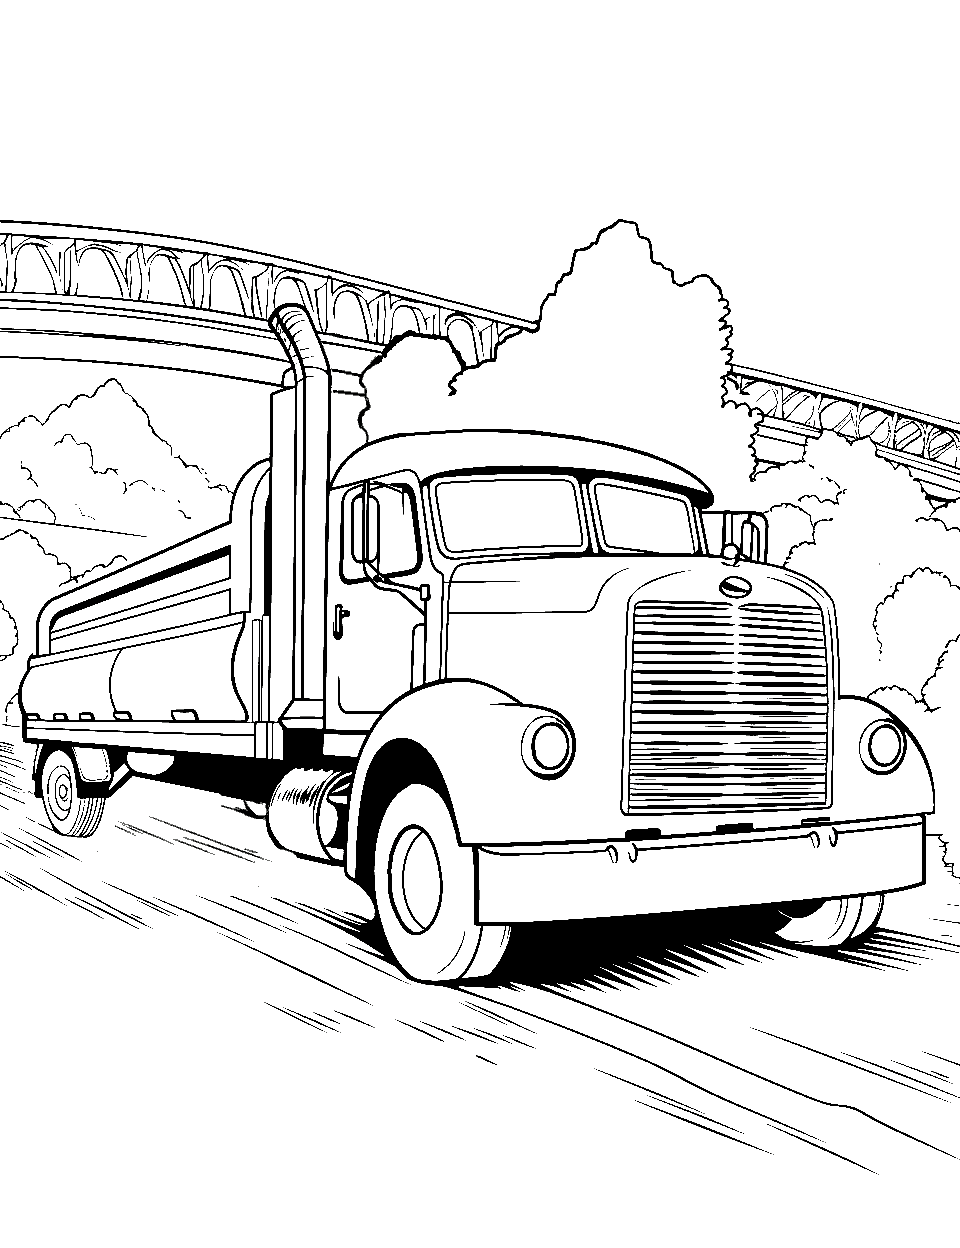 Semi Truck Under Bridge Coloring Page - A semi-truck driving under a bridge.